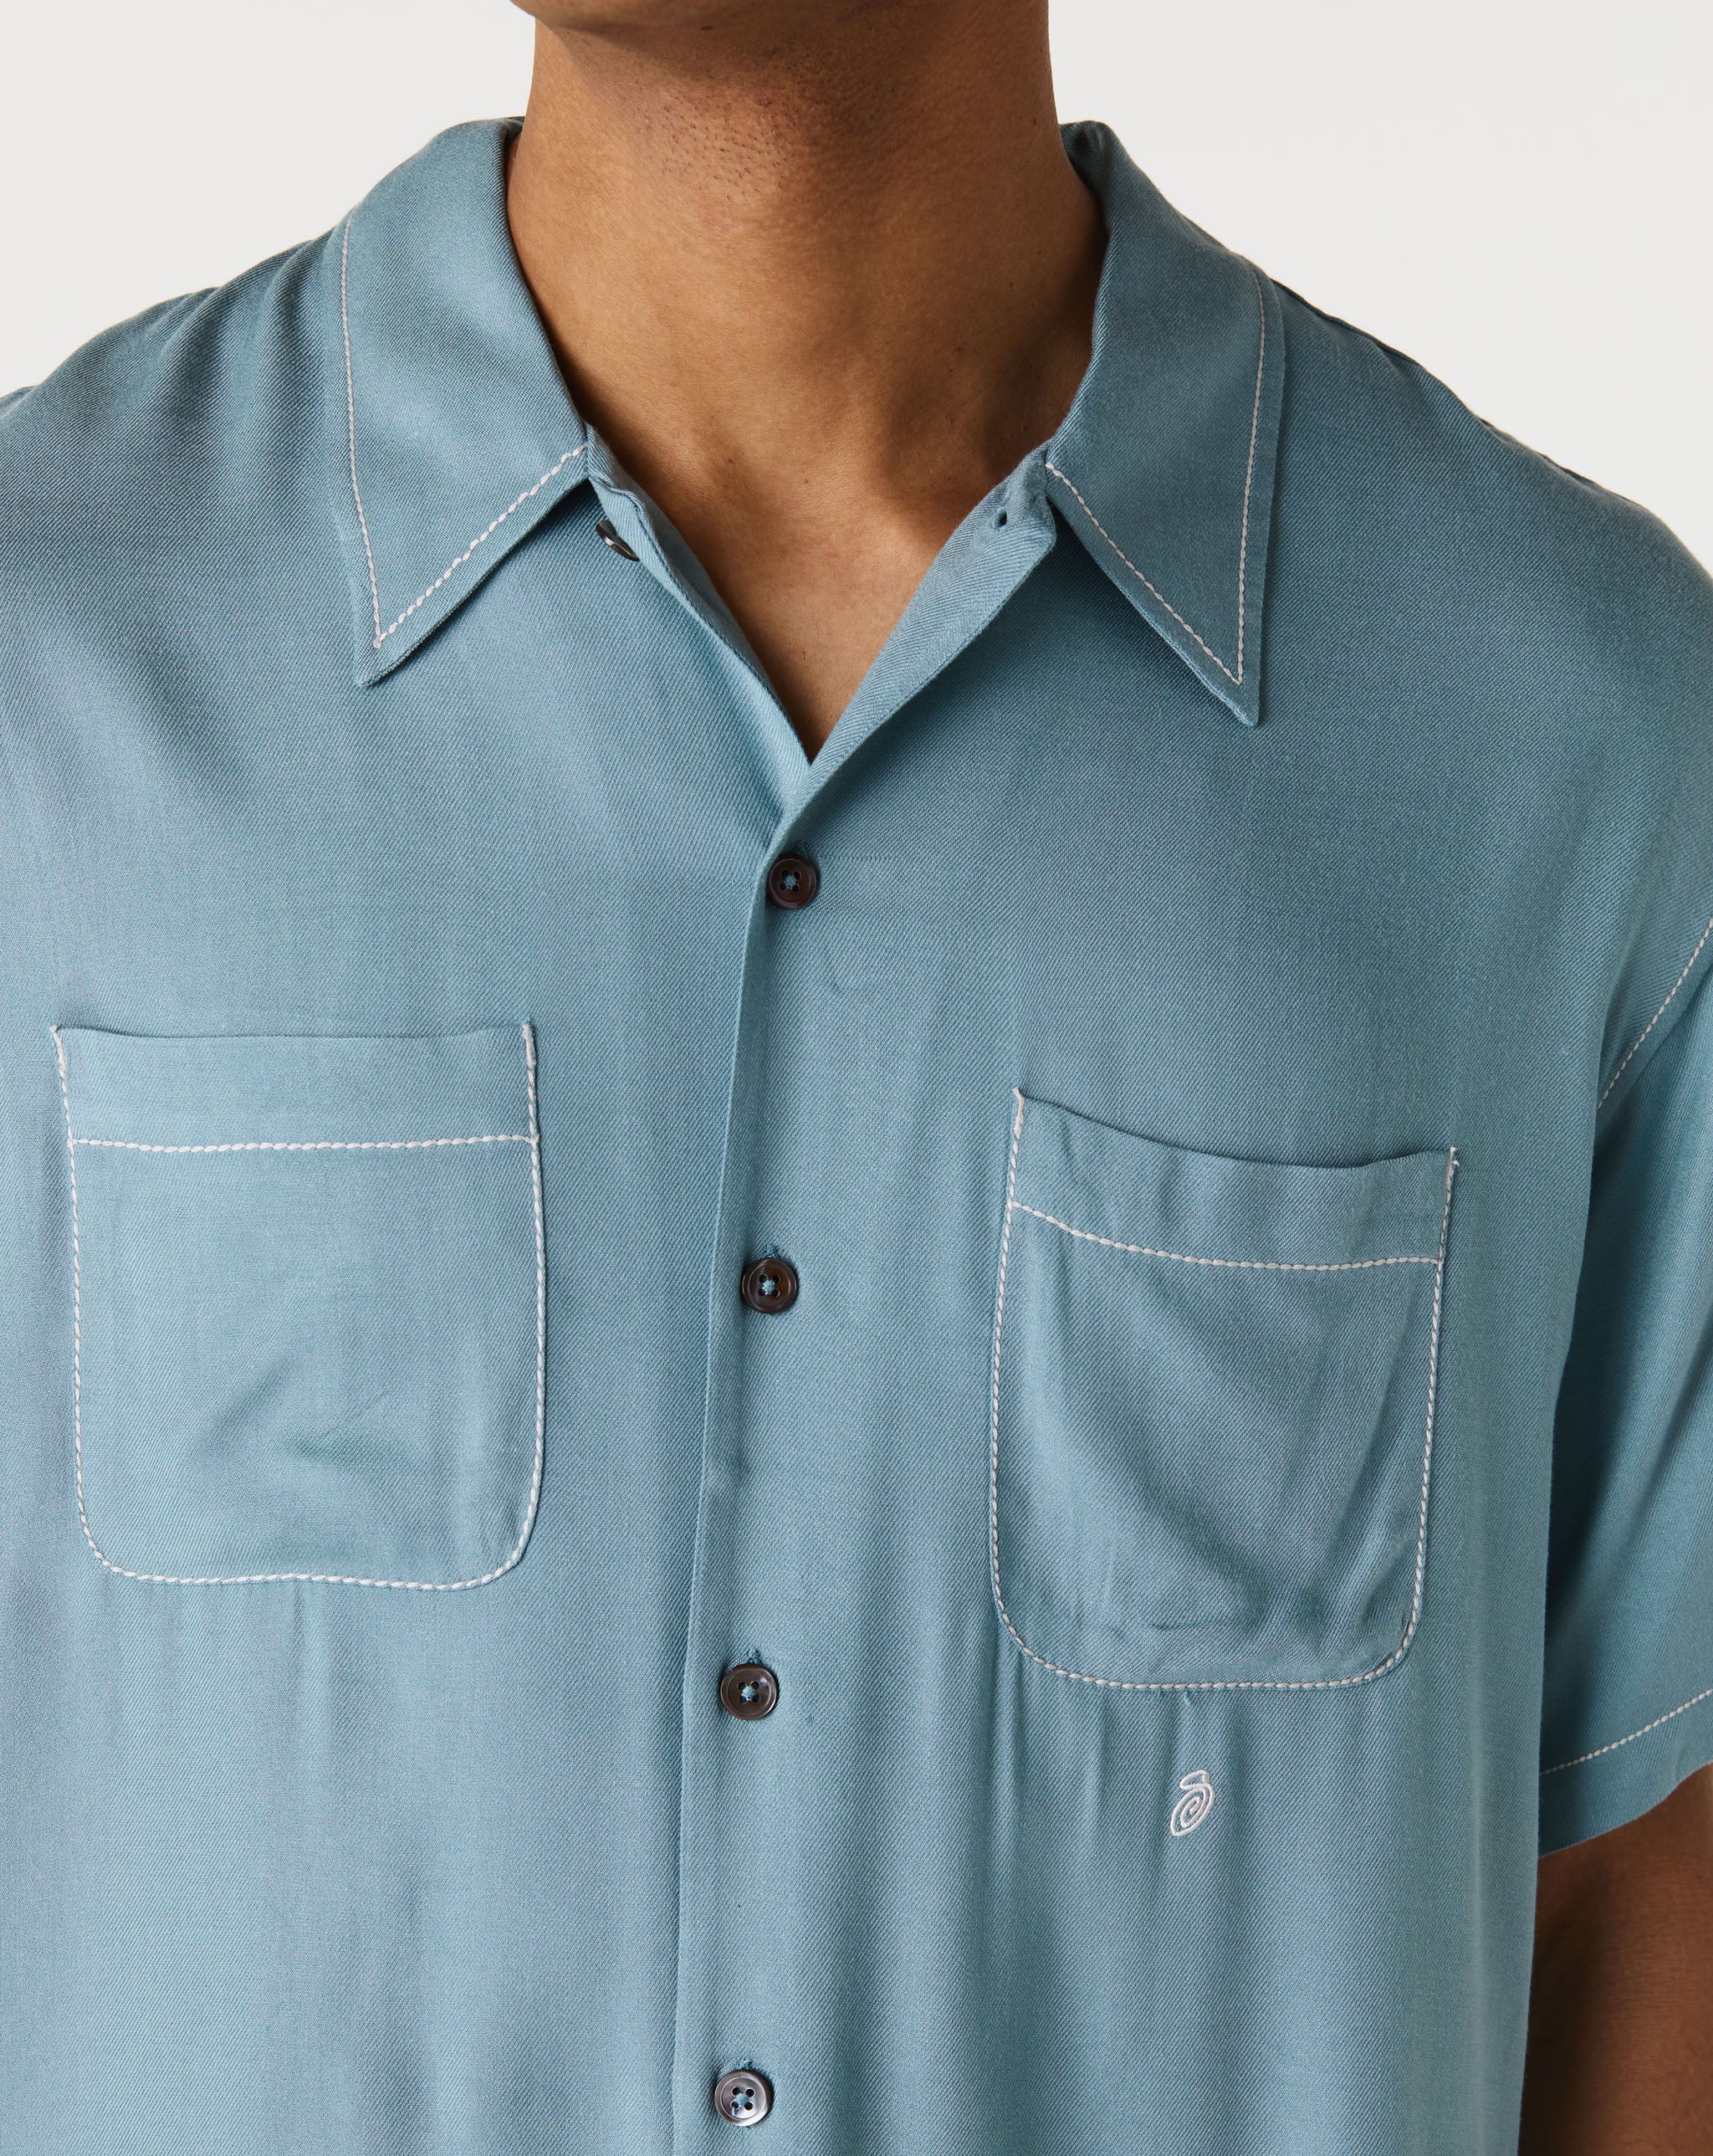 Contrast Stitched Shirt – Xhibition